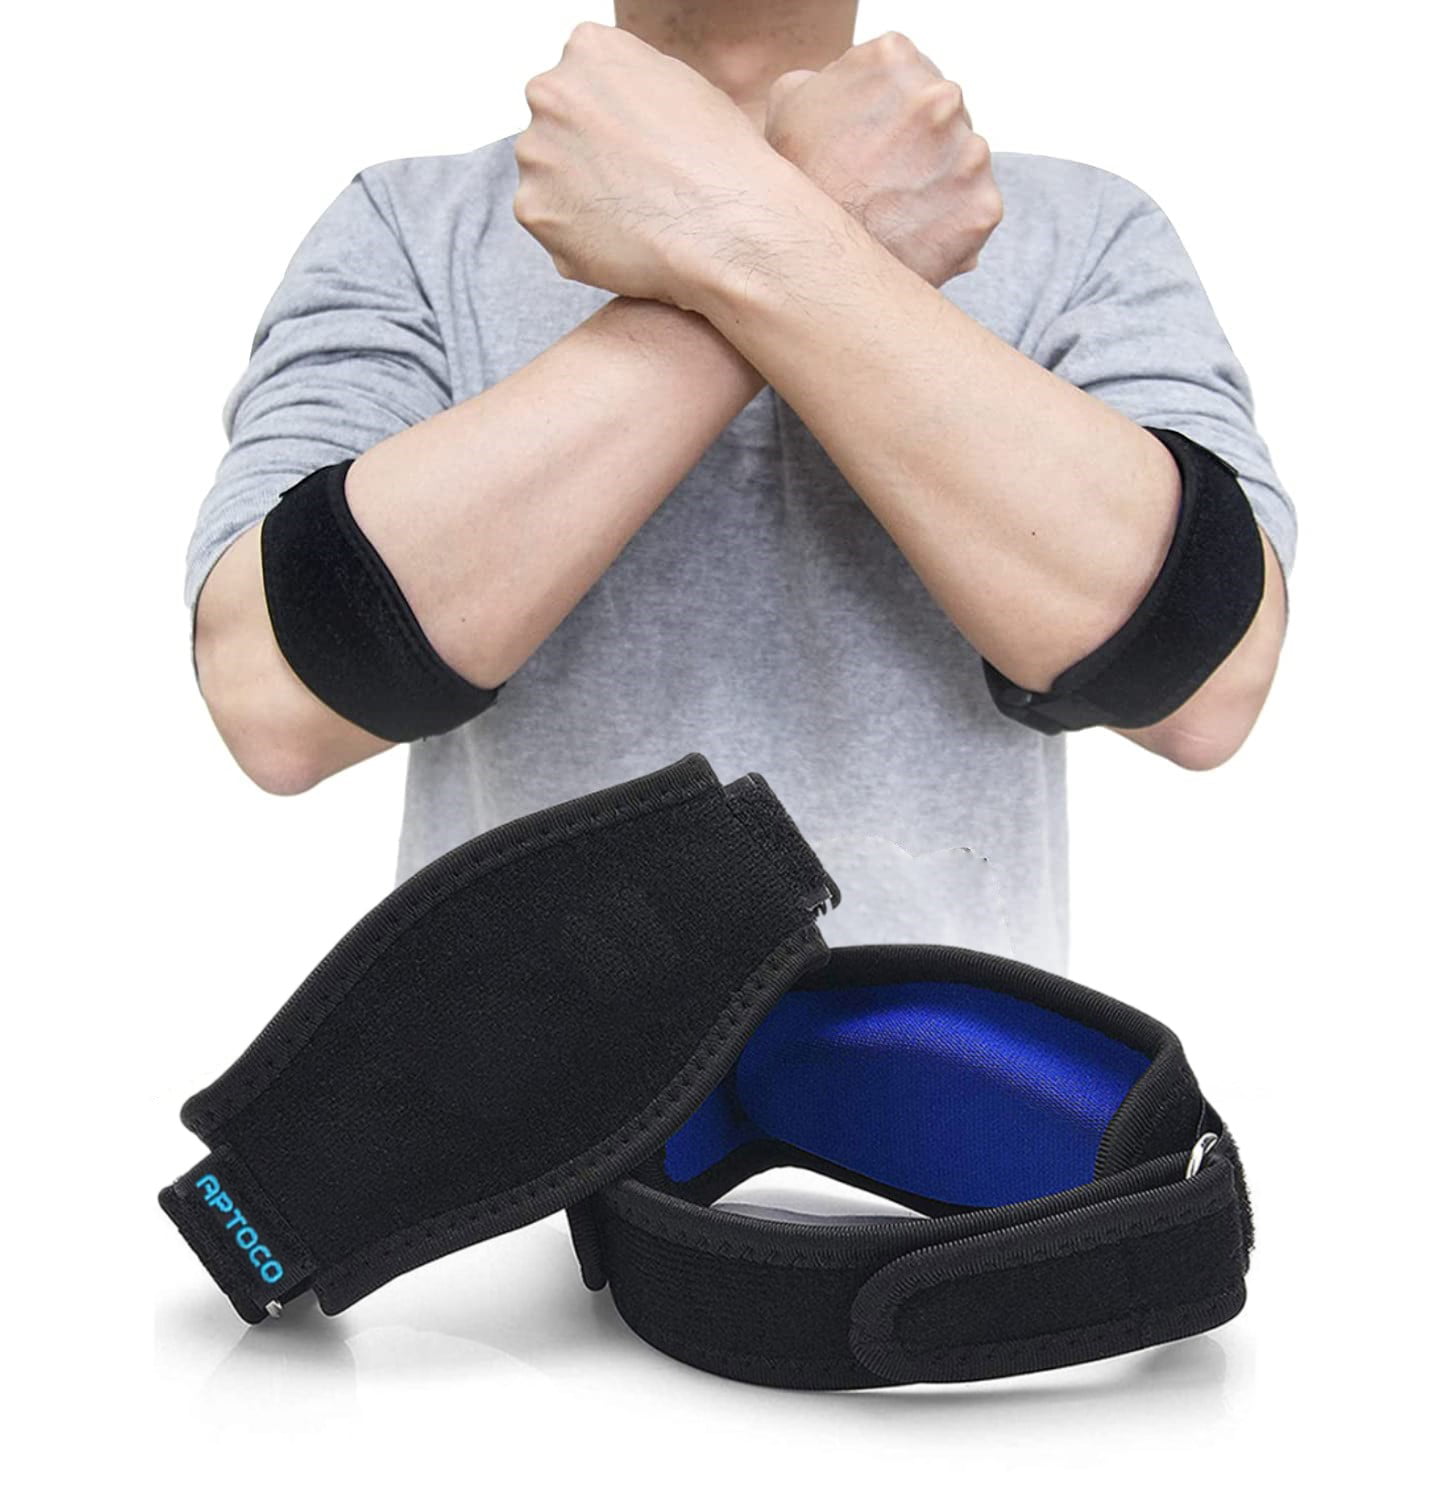 Details about   1pc Elbow Brace Support Arm Pads Wraparound Compression Guard Arthritis Strap 